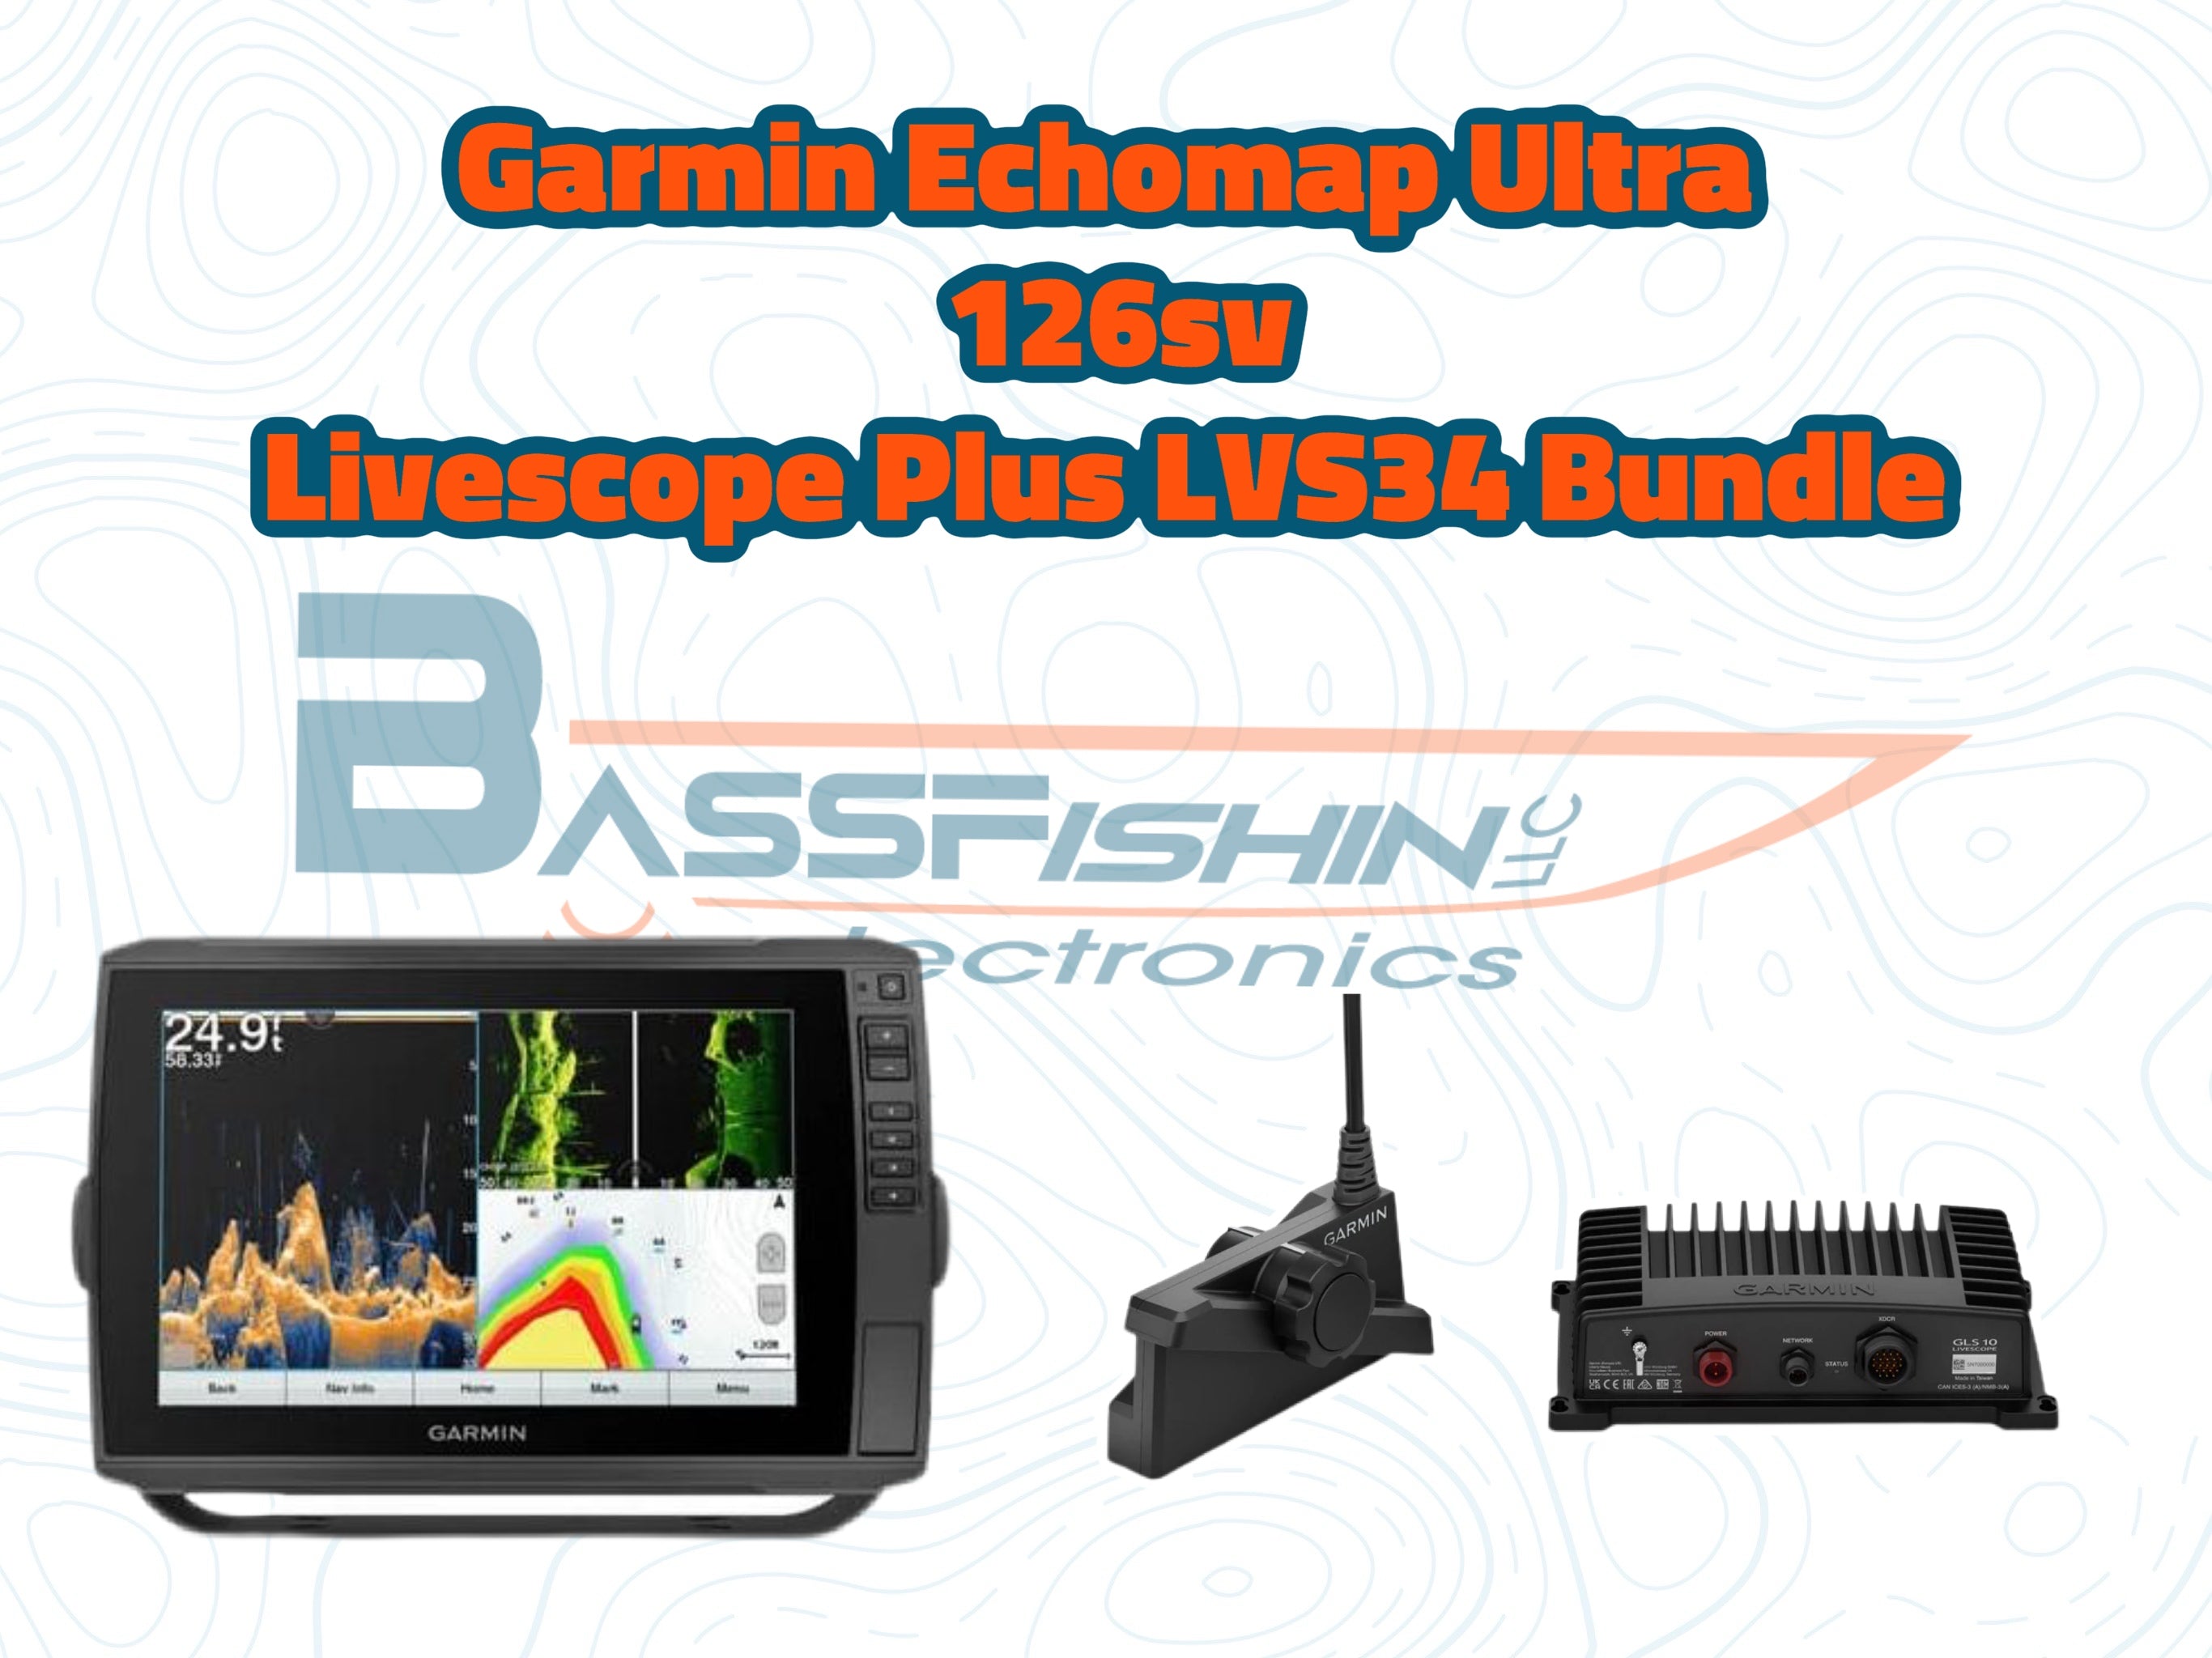 Garmin Echomap Ultra 126sv and Livescope Plus LVS34 Bundle – BassFishin  Electronics, LLC